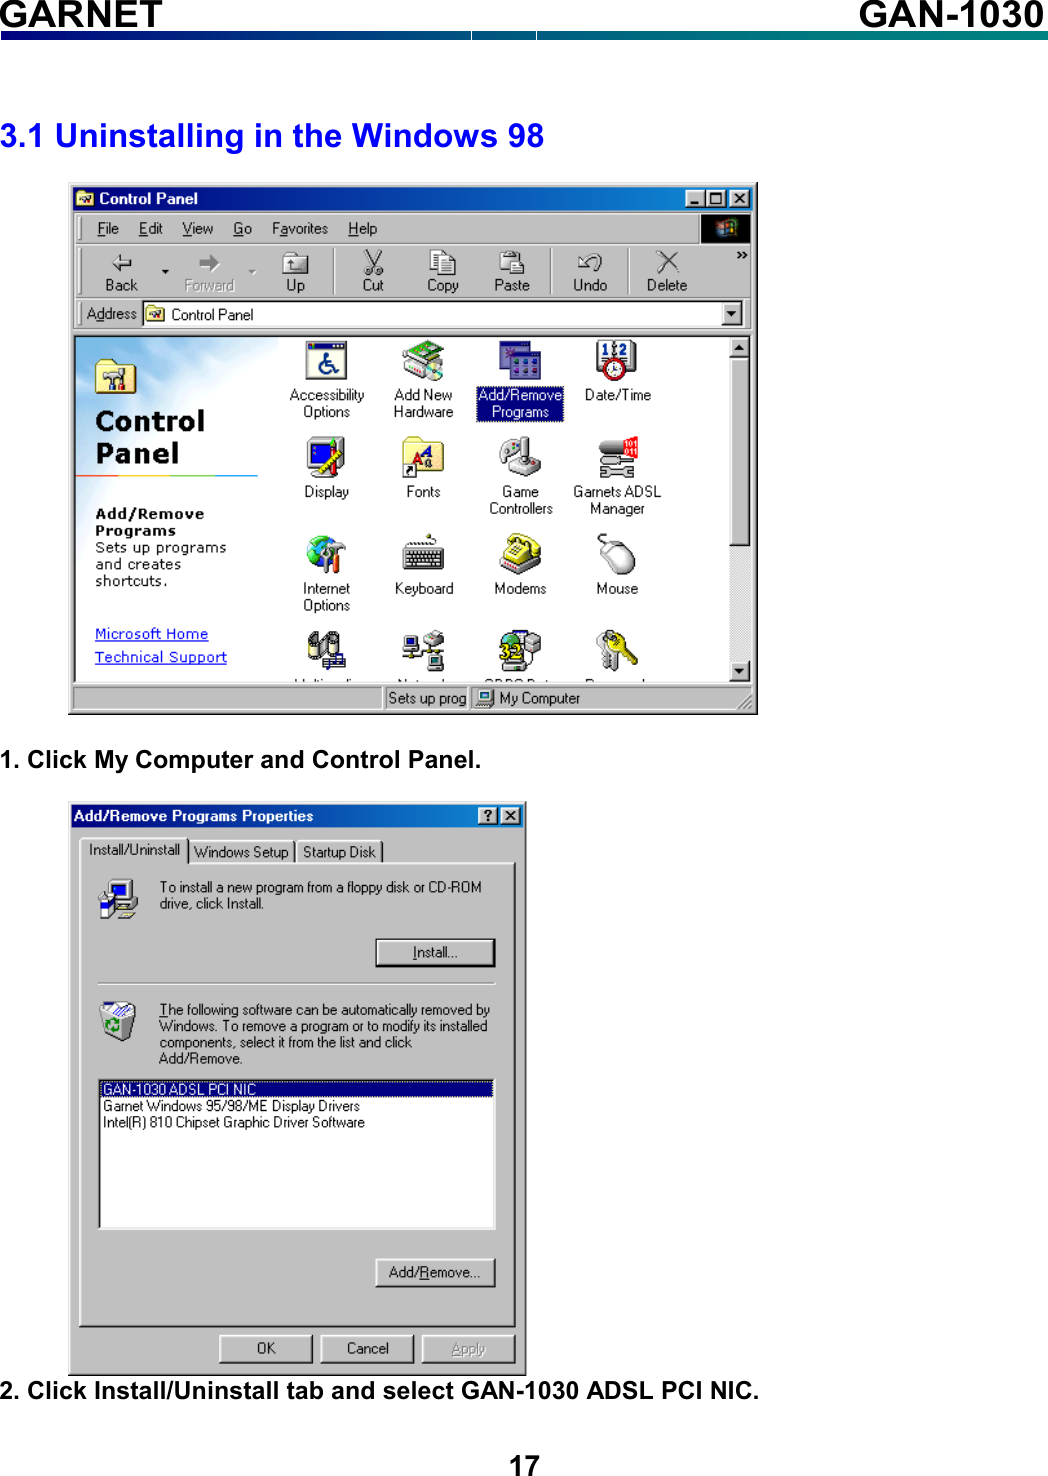   17    GARNET GAN-1030  3.1 Uninstalling in the Windows 98    1. Click My Computer and Control Panel.   2. Click Install/Uninstall tab and select GAN-1030 ADSL PCI NIC.  